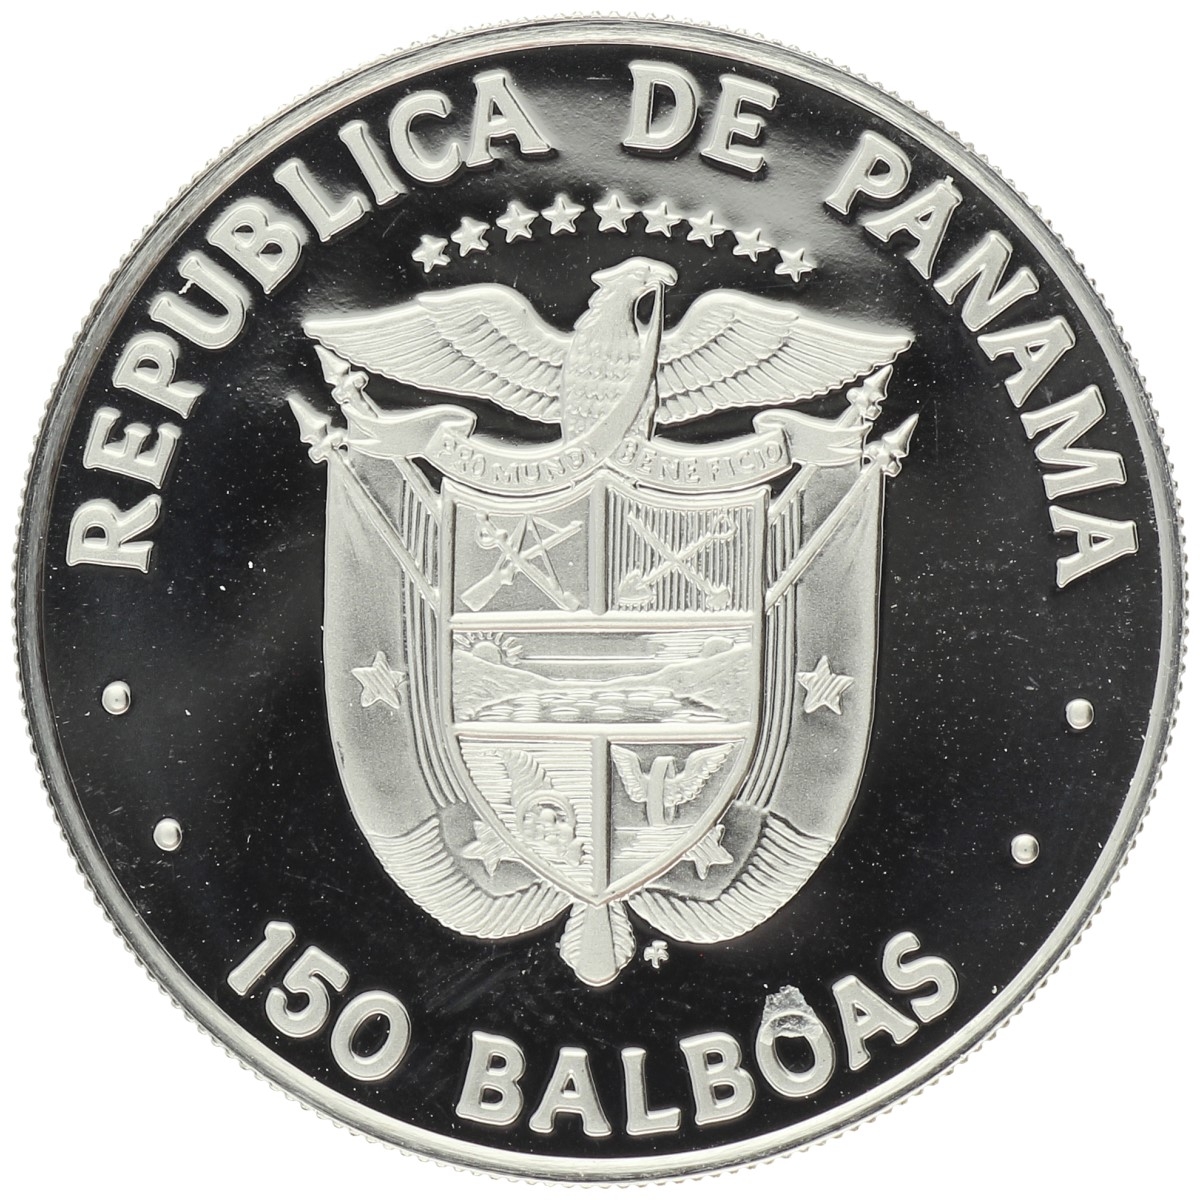 Panama - 150 balboas - 1976 - Panama Congress